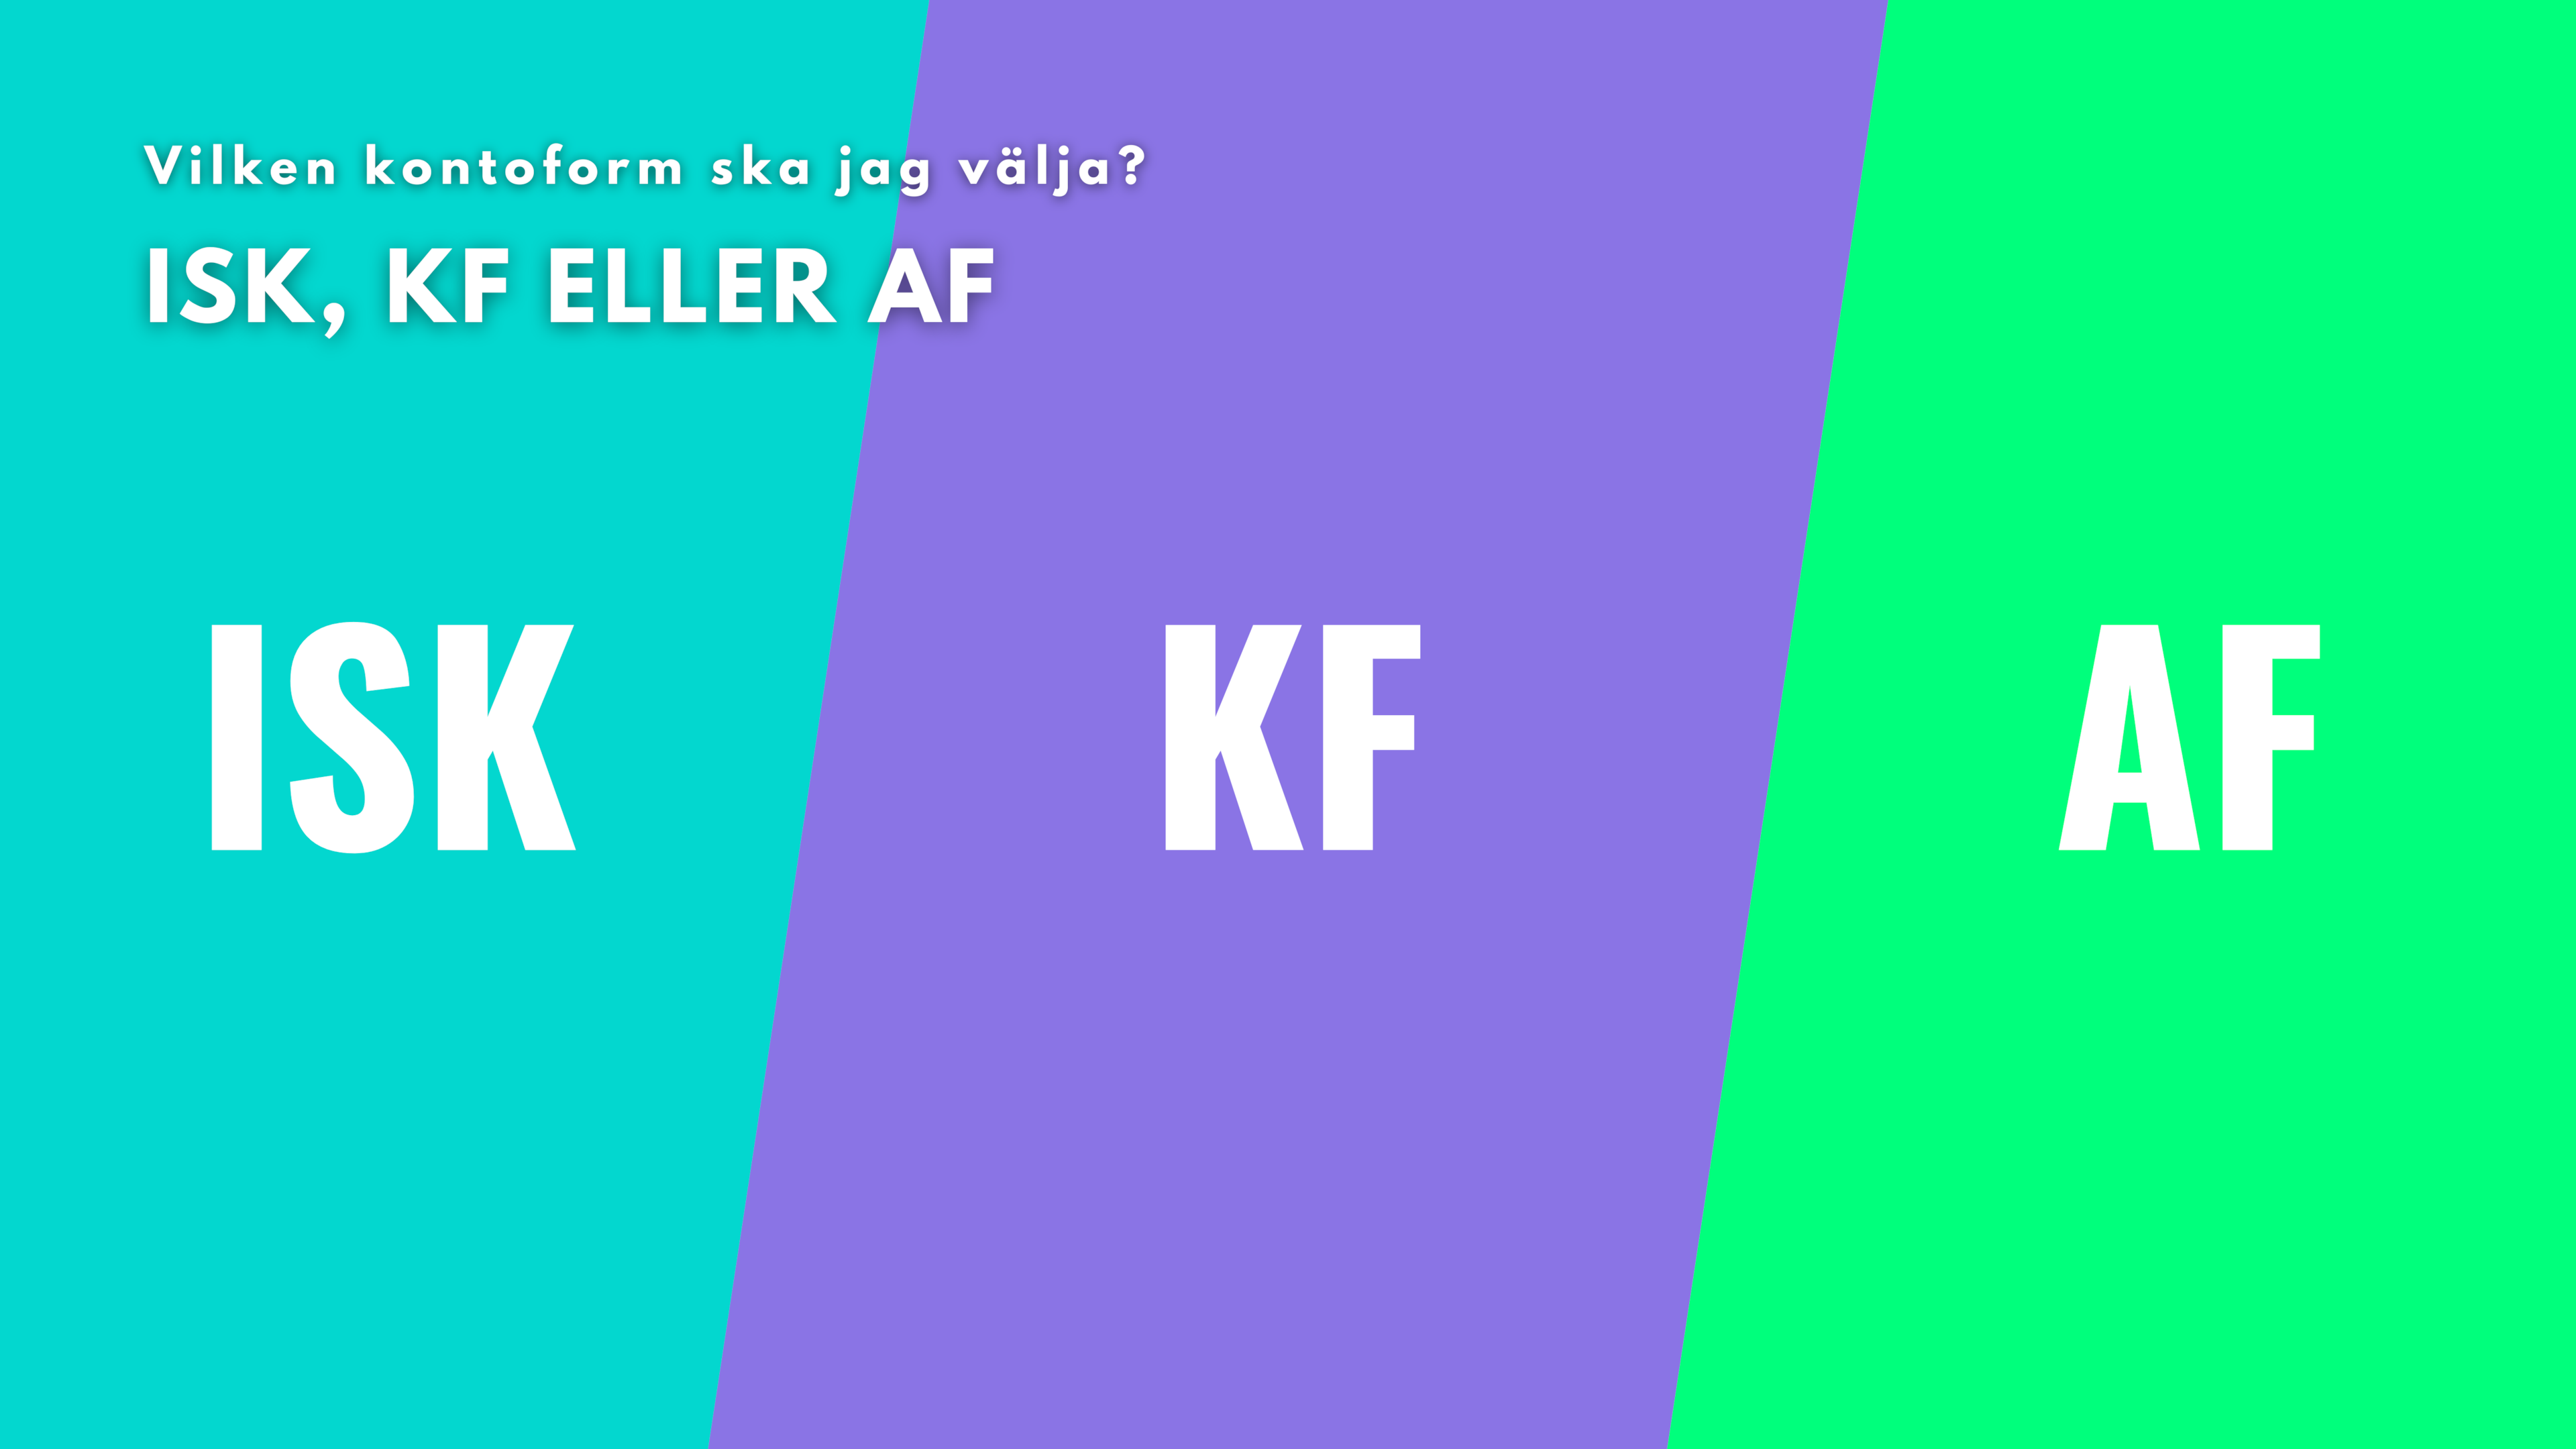 ISK, KF eller AF - Vilken kontoform ska jag välja?